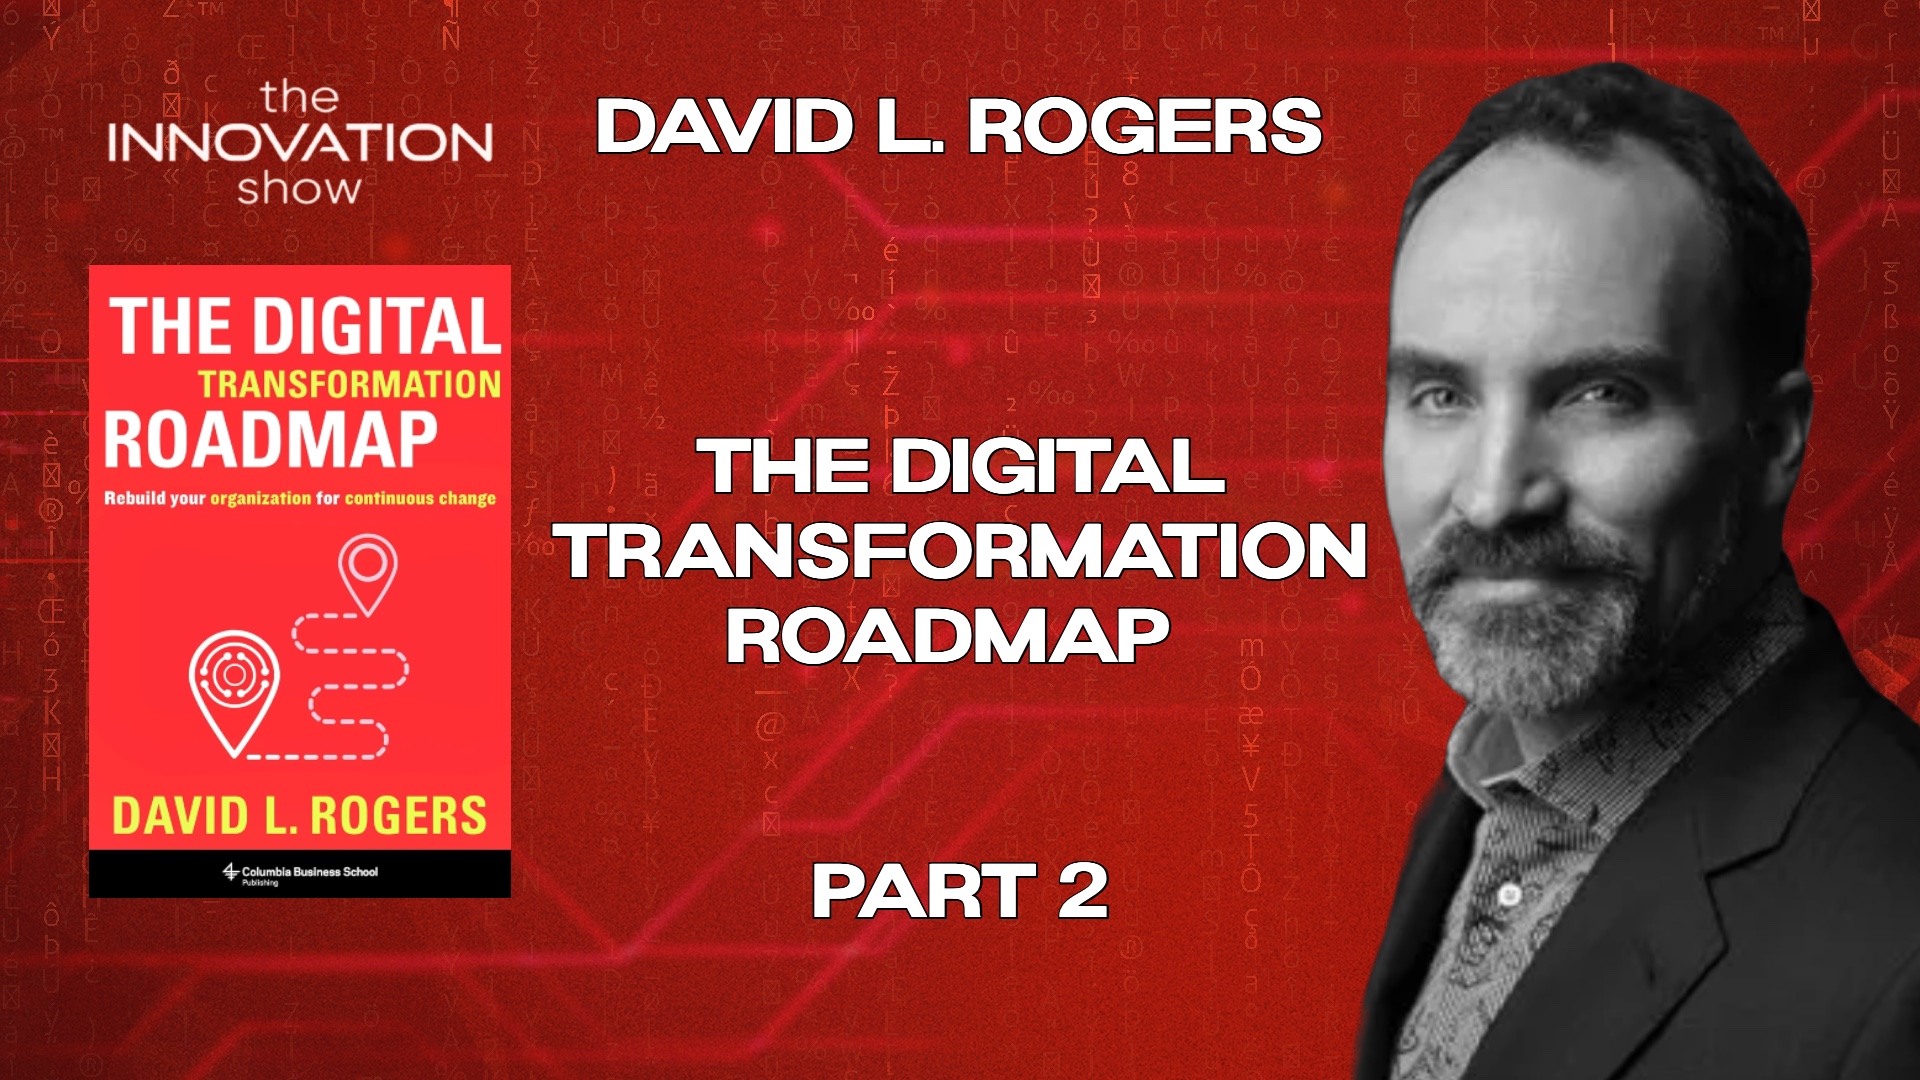 David L. Rogers Digital Transformation Roadmap Book Interview